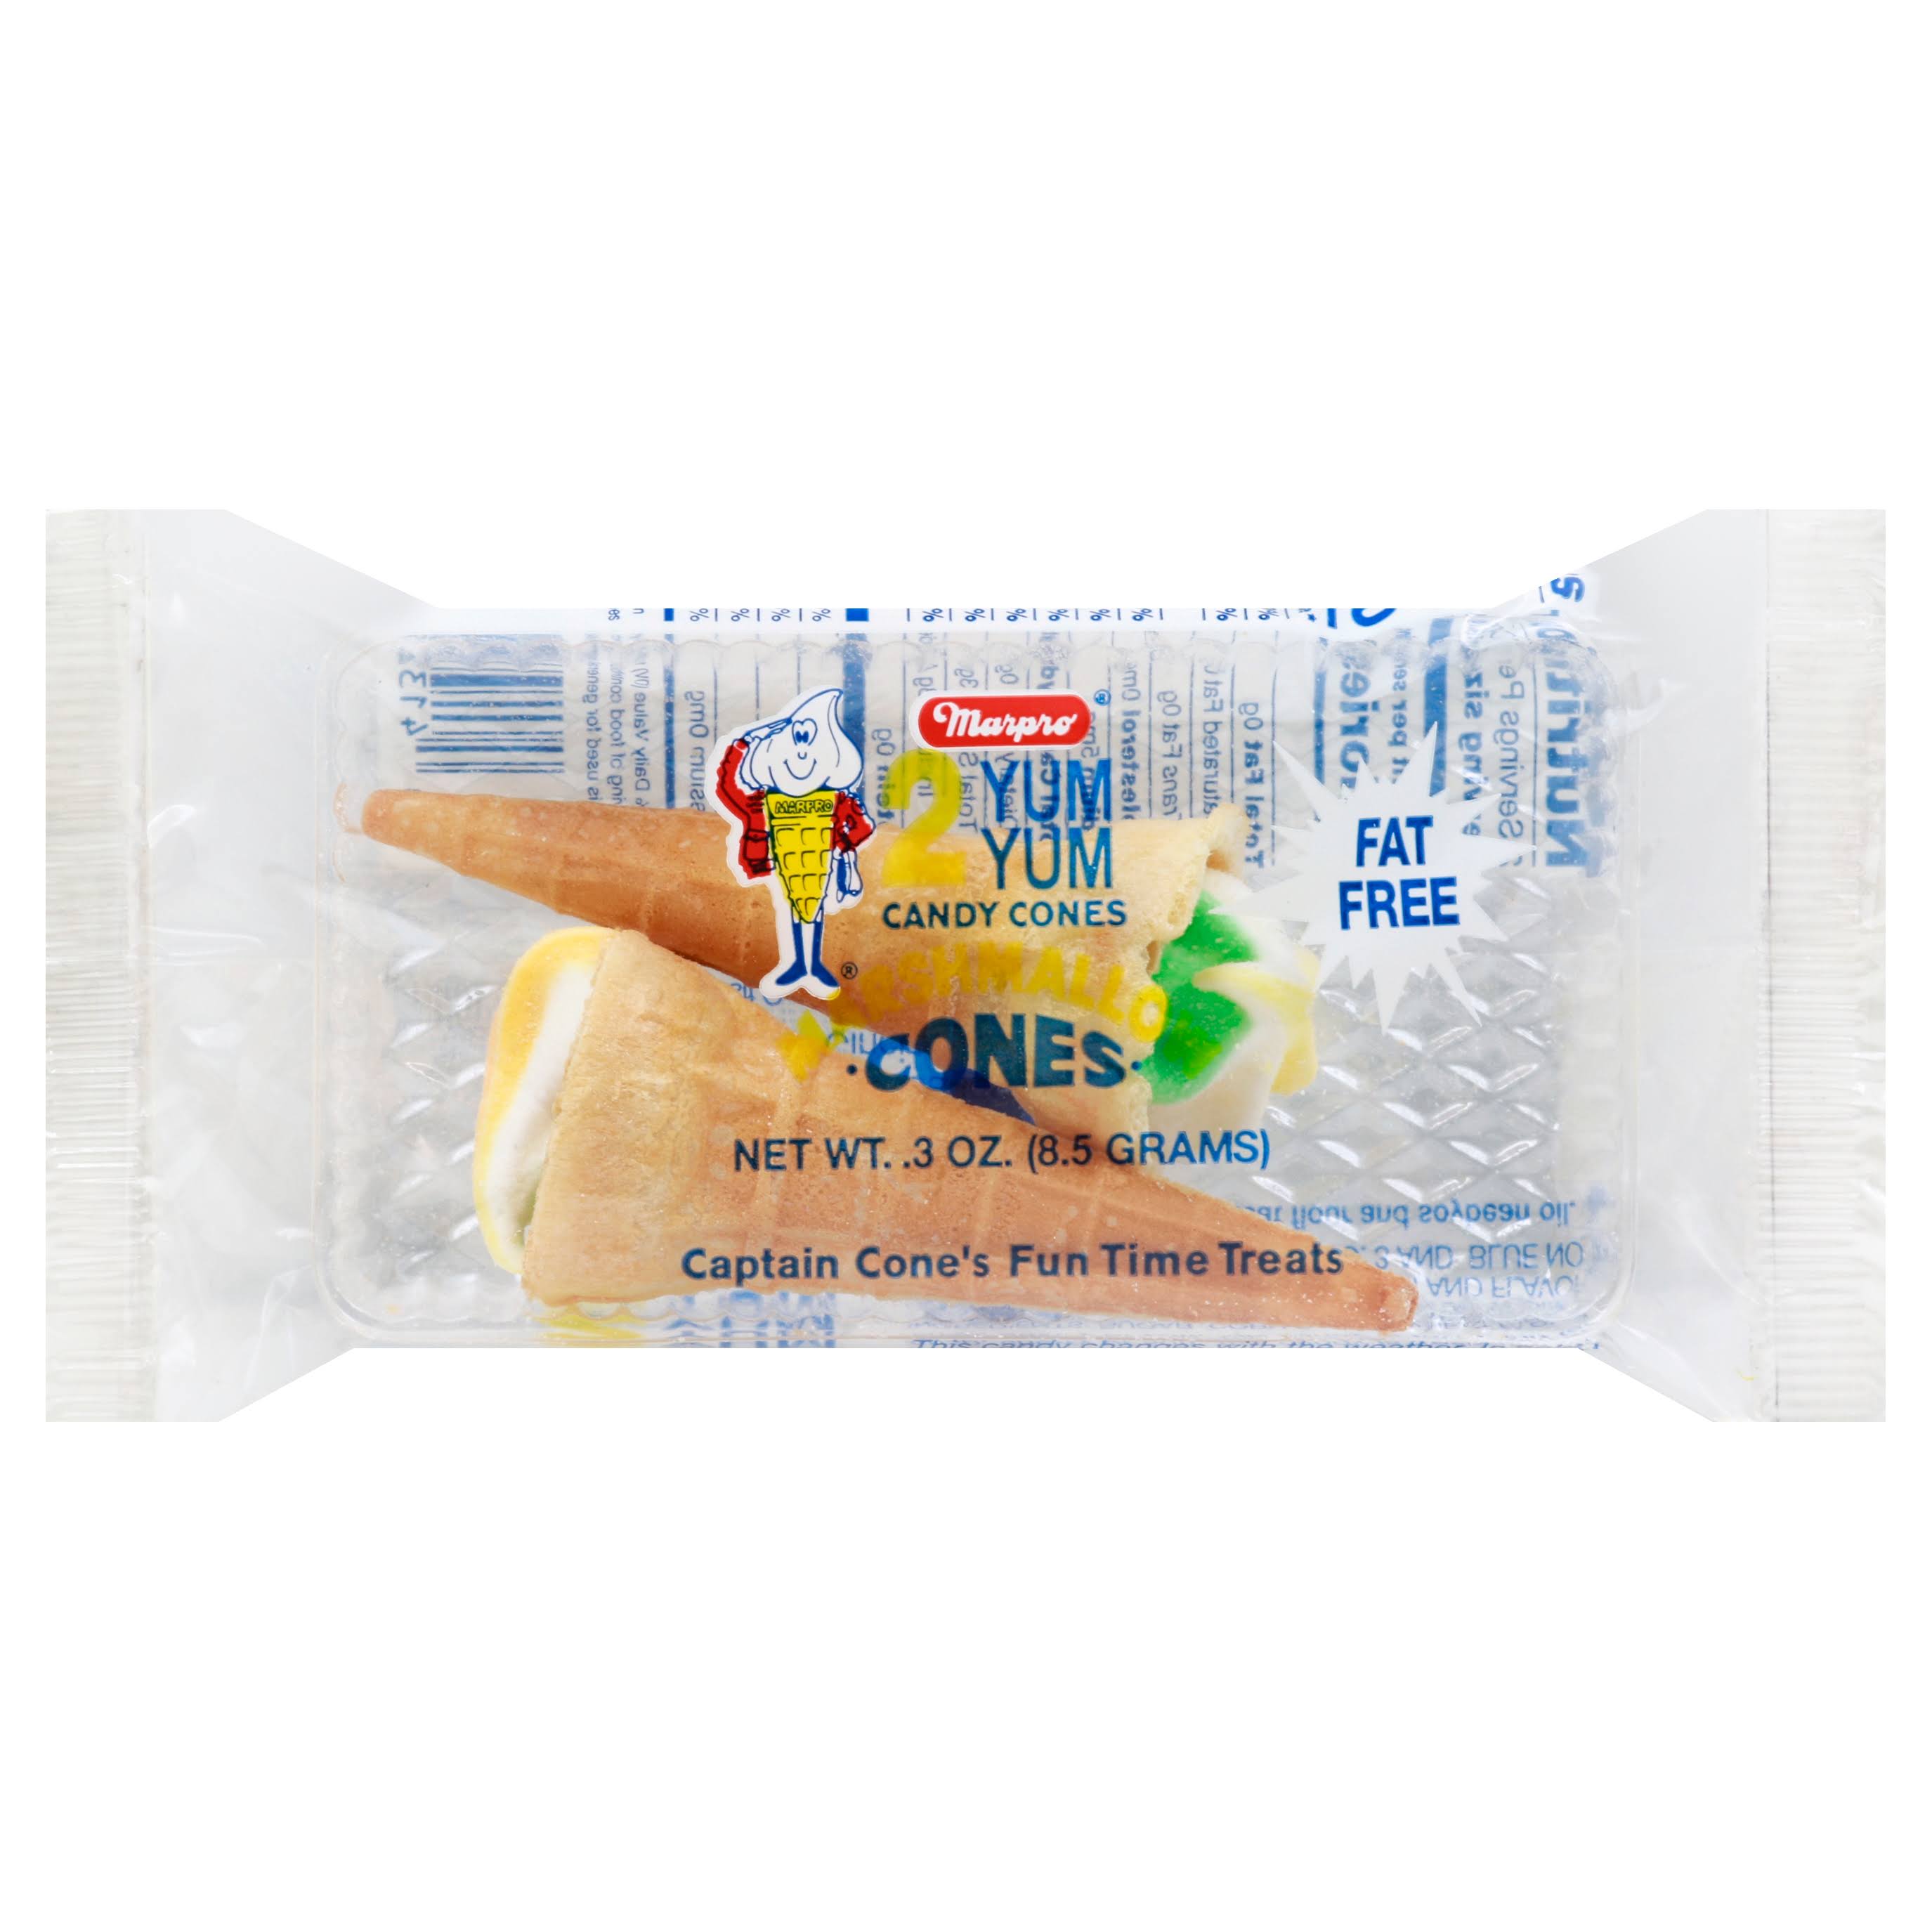 Yum Yum Marshmallow Candy Cones - 8.5g